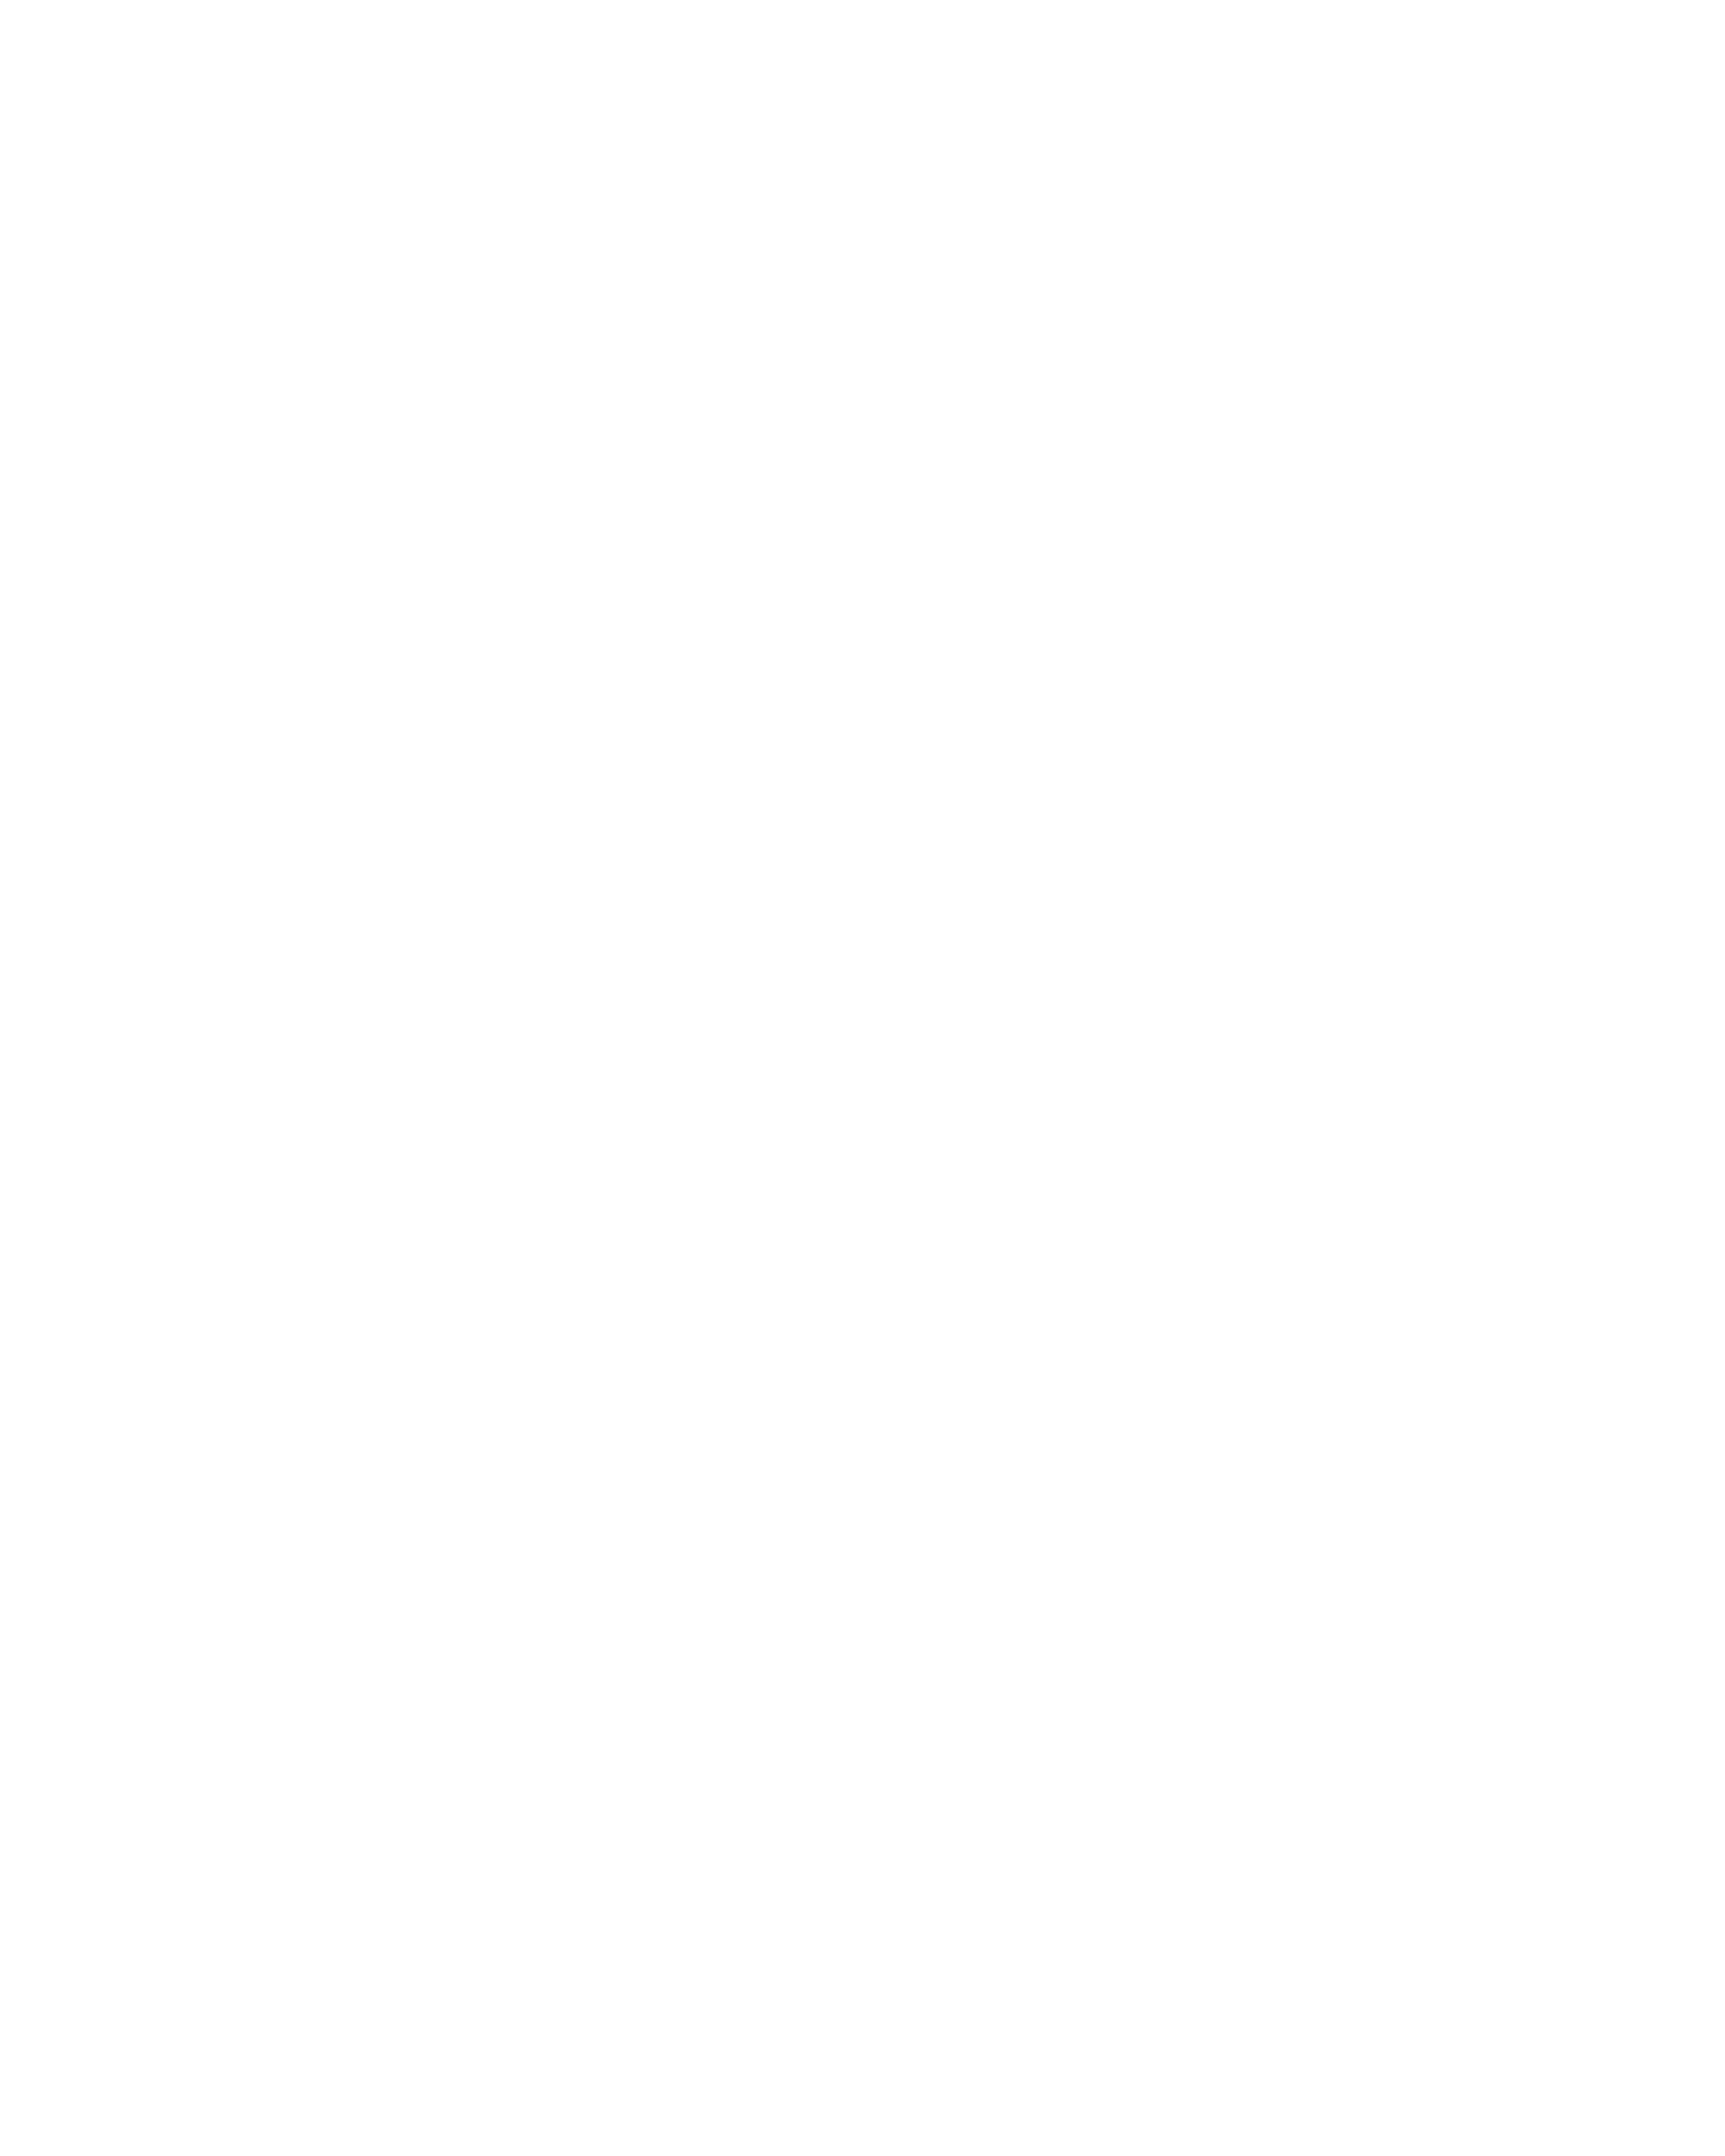 gothatbuzz